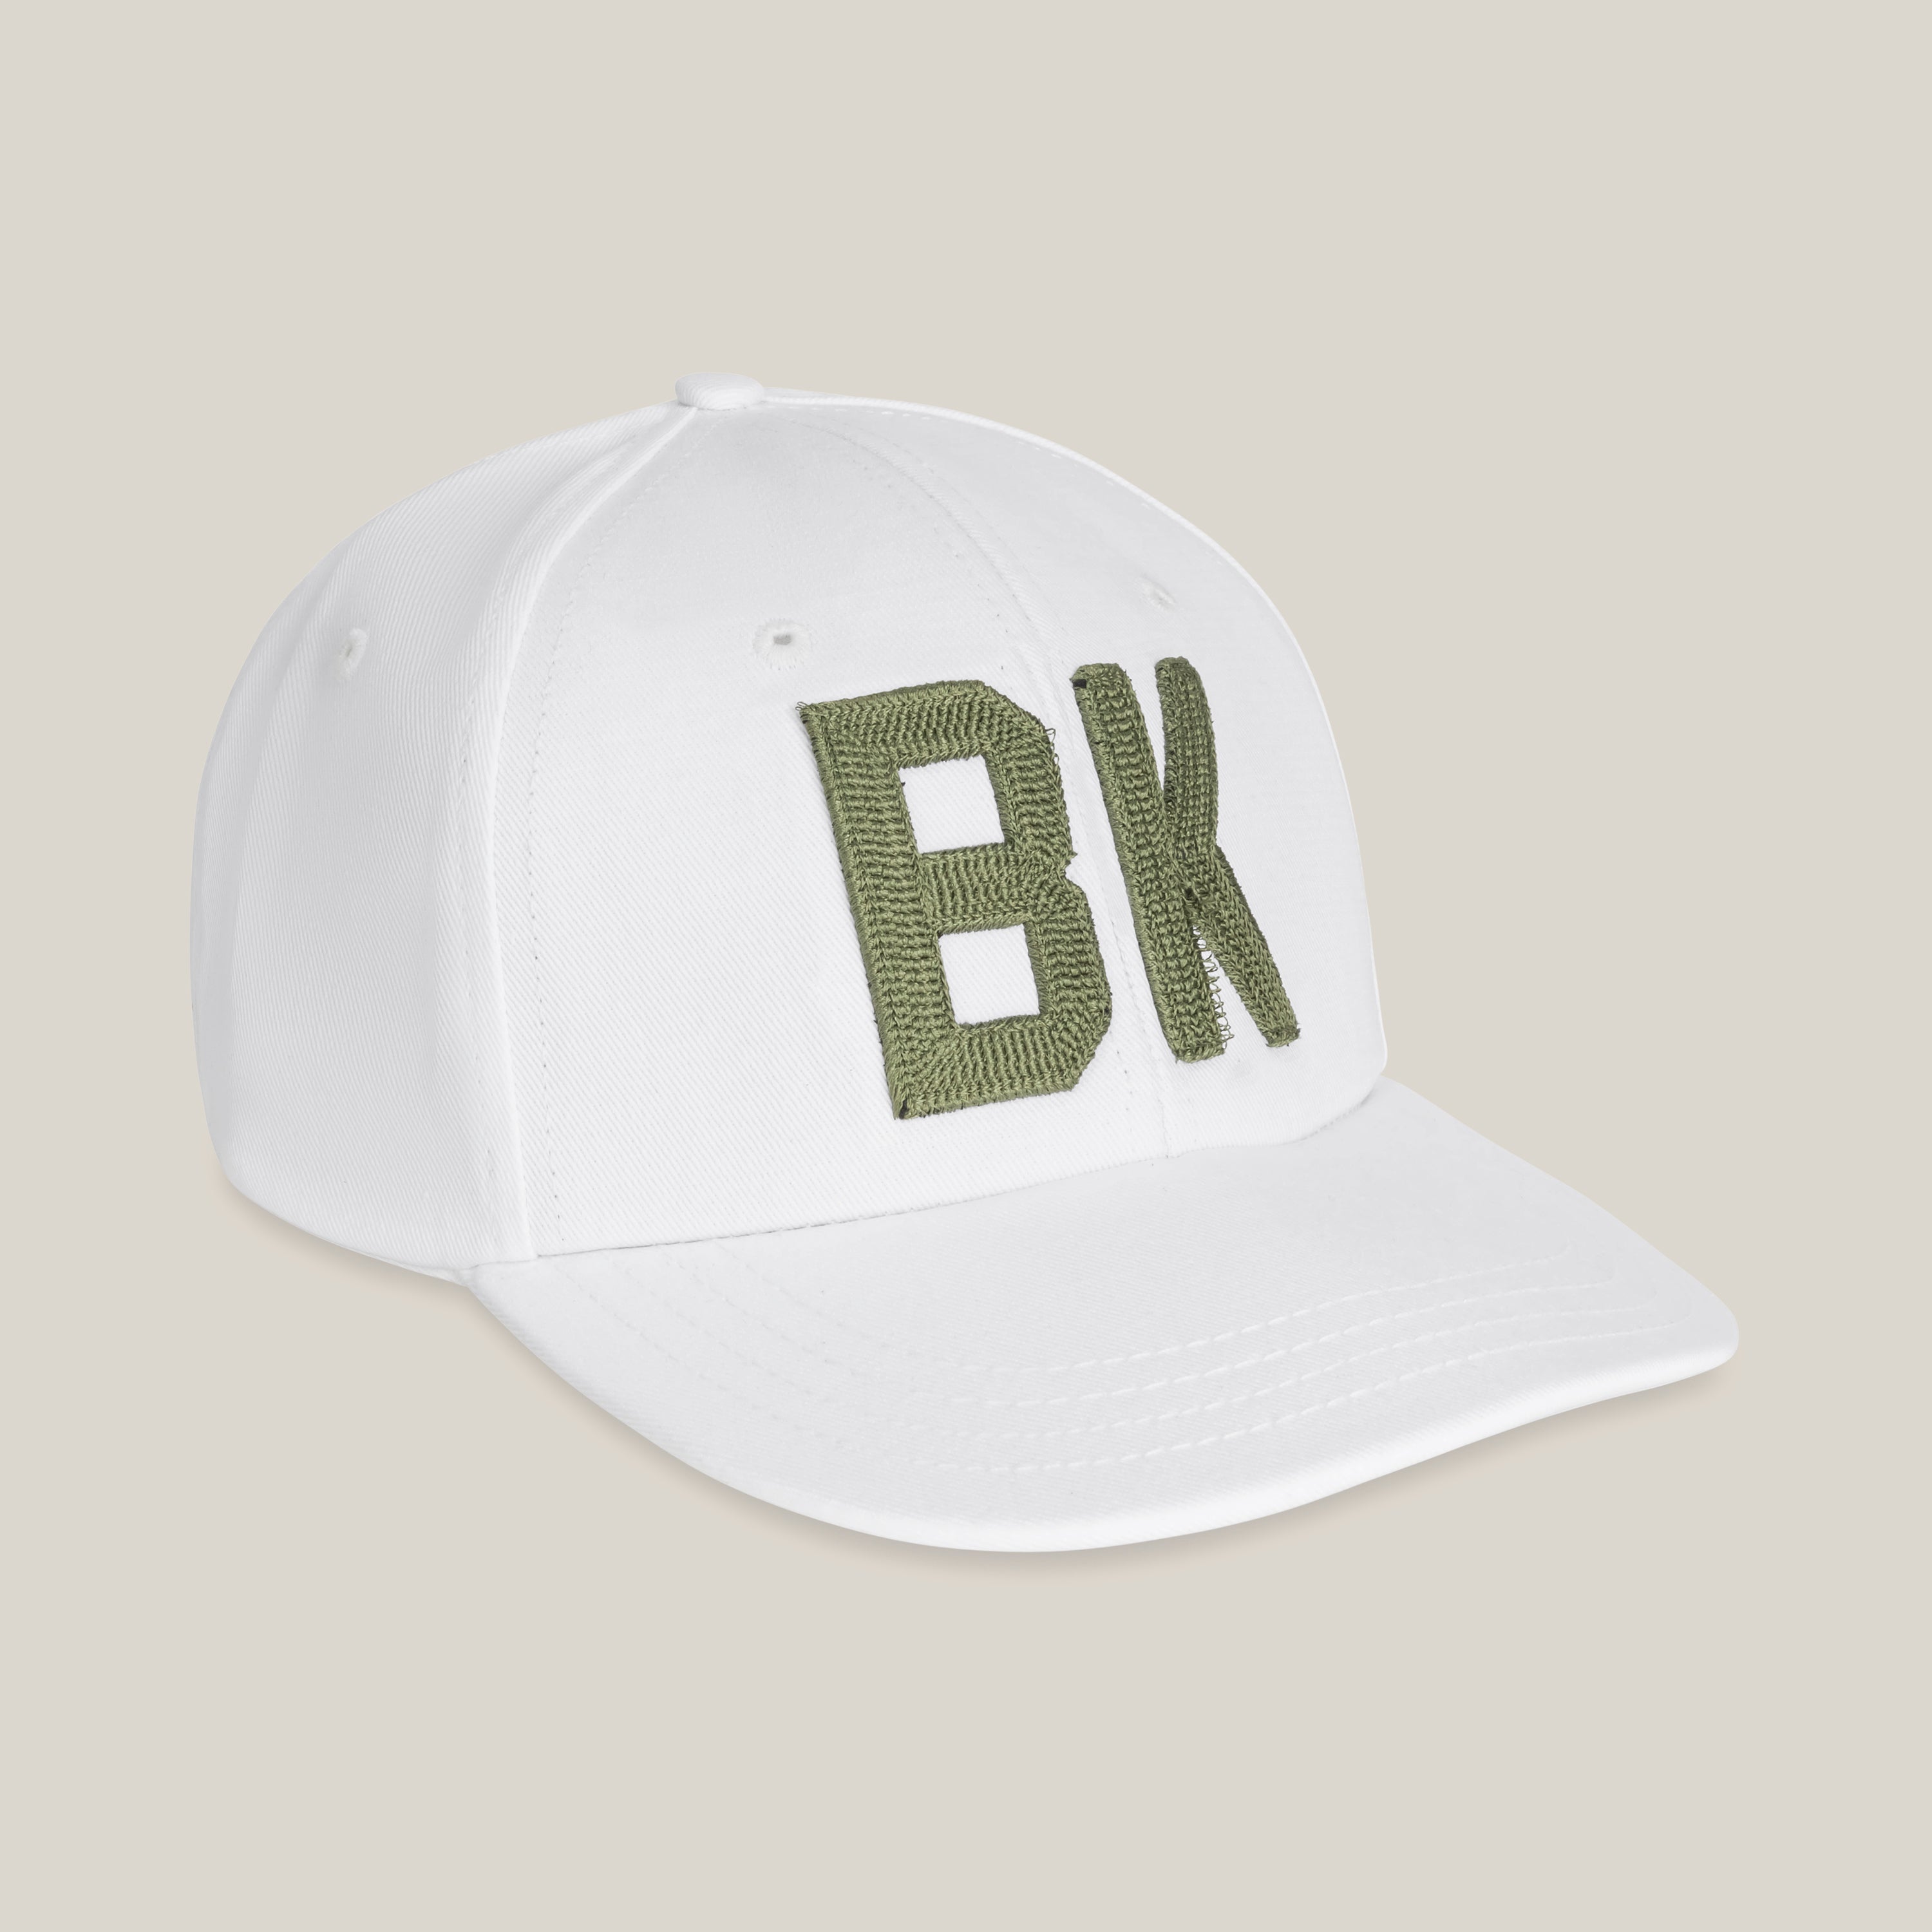 BK Keystone Embroidered Hat - White